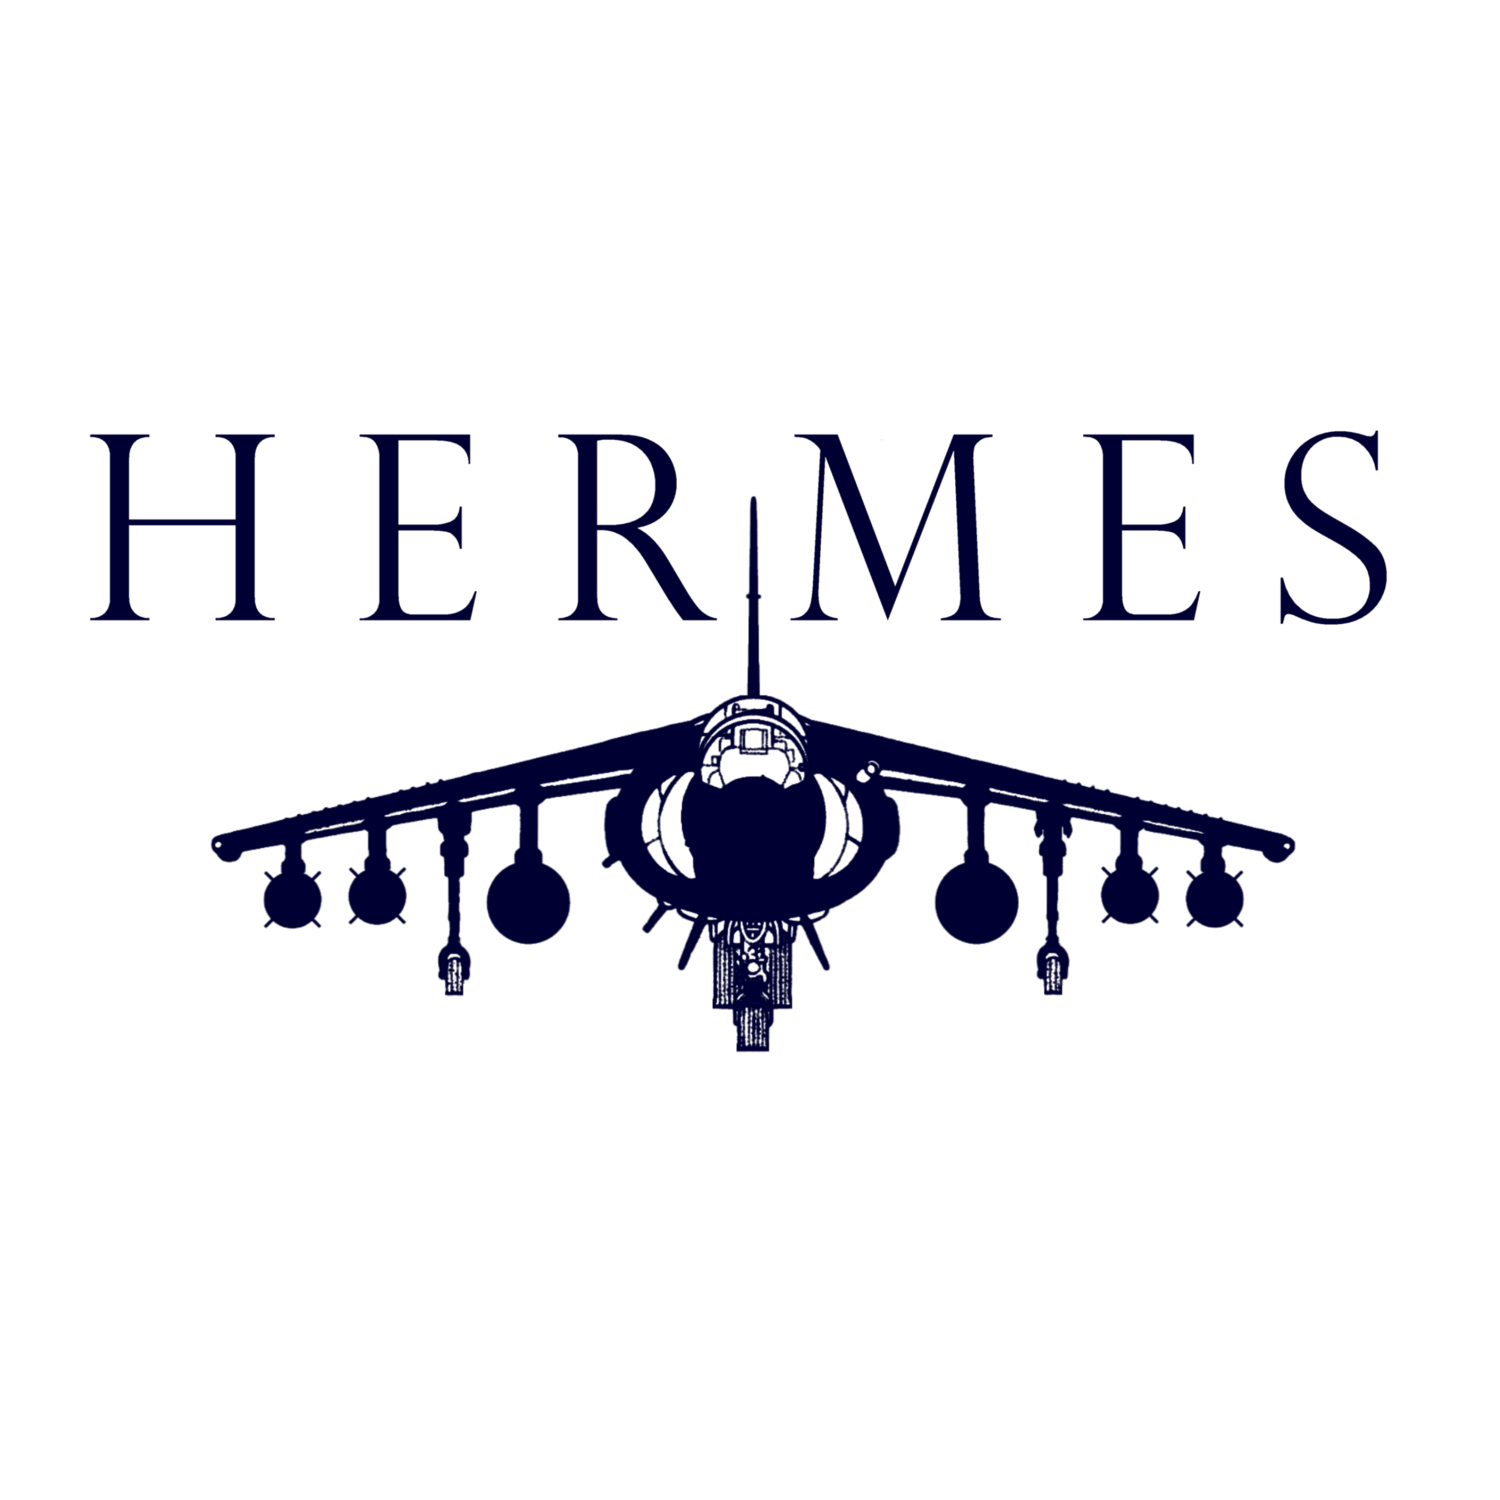 Hermes Amphibious Strike Task Group